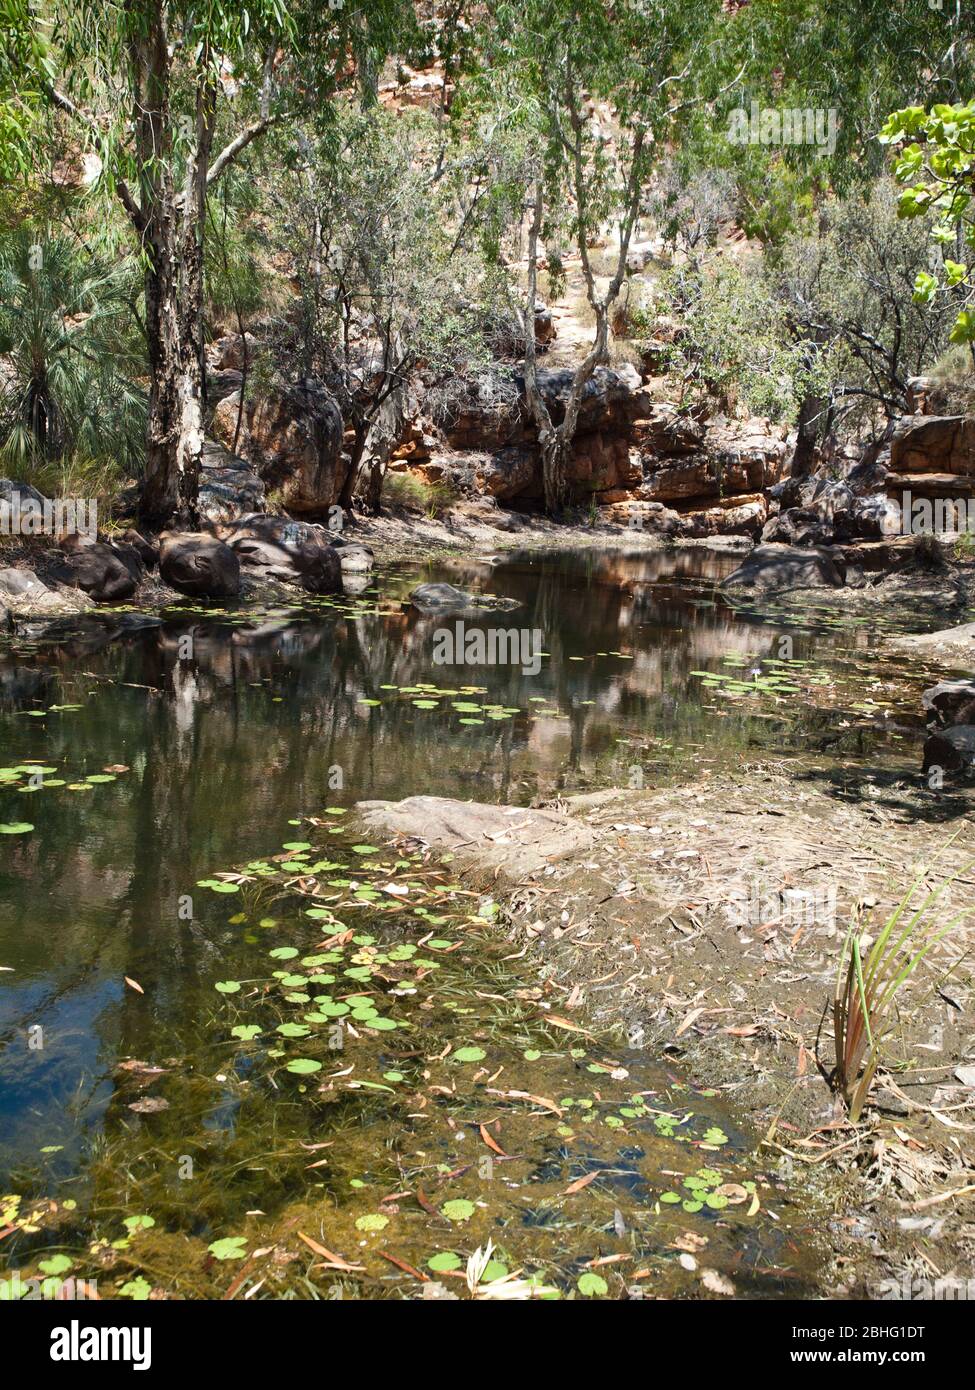 Water lilies (Nymphaea violacea), paperbarks (Melaleuca leucadendra) and livistona palms line a small pool, Kimberley, Western Australia Stock Photo